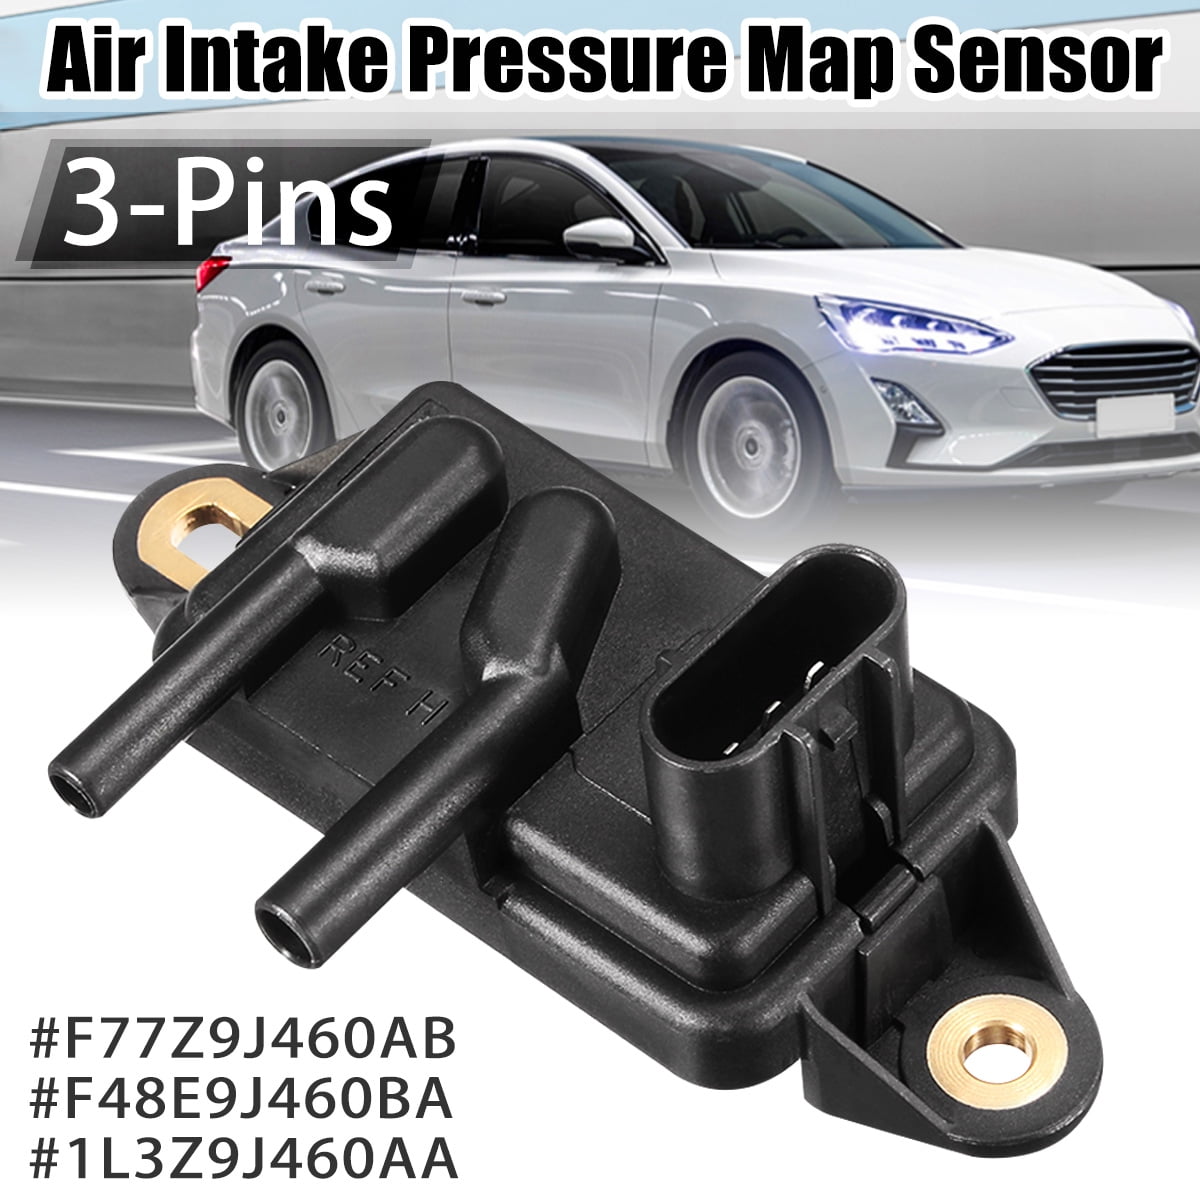 Car Intake Pressure Feedback Sensor DPFE 15 For Ford Mercury Lincoln Mazda Truck